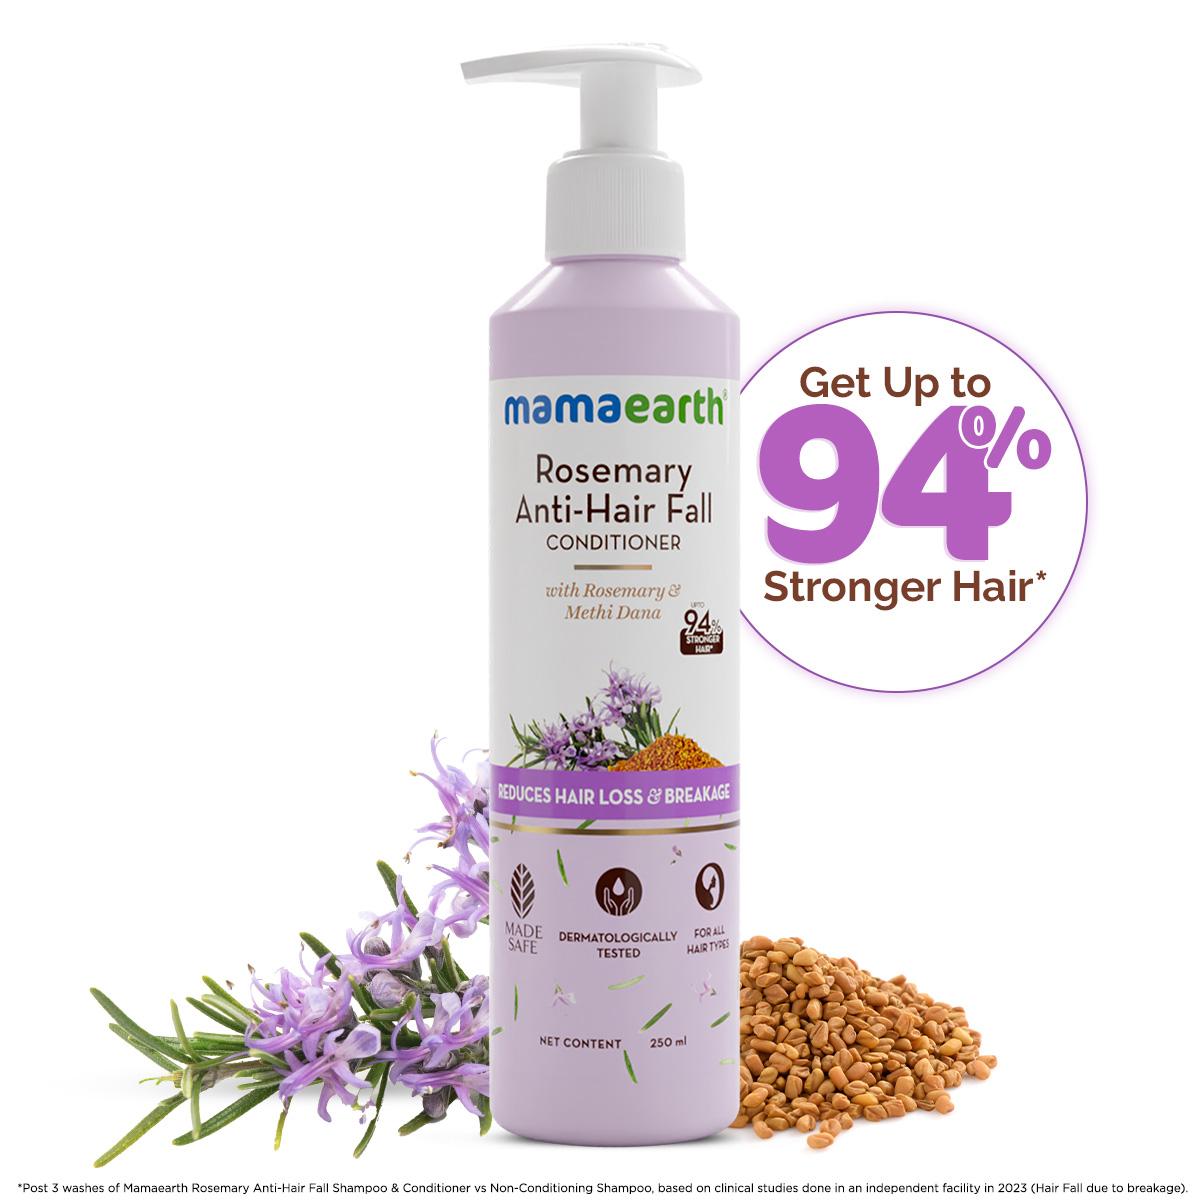 rosemary anti-hair fall conditioner with rosemary & methi dana for reducing hair loss & breakage - 250 ml